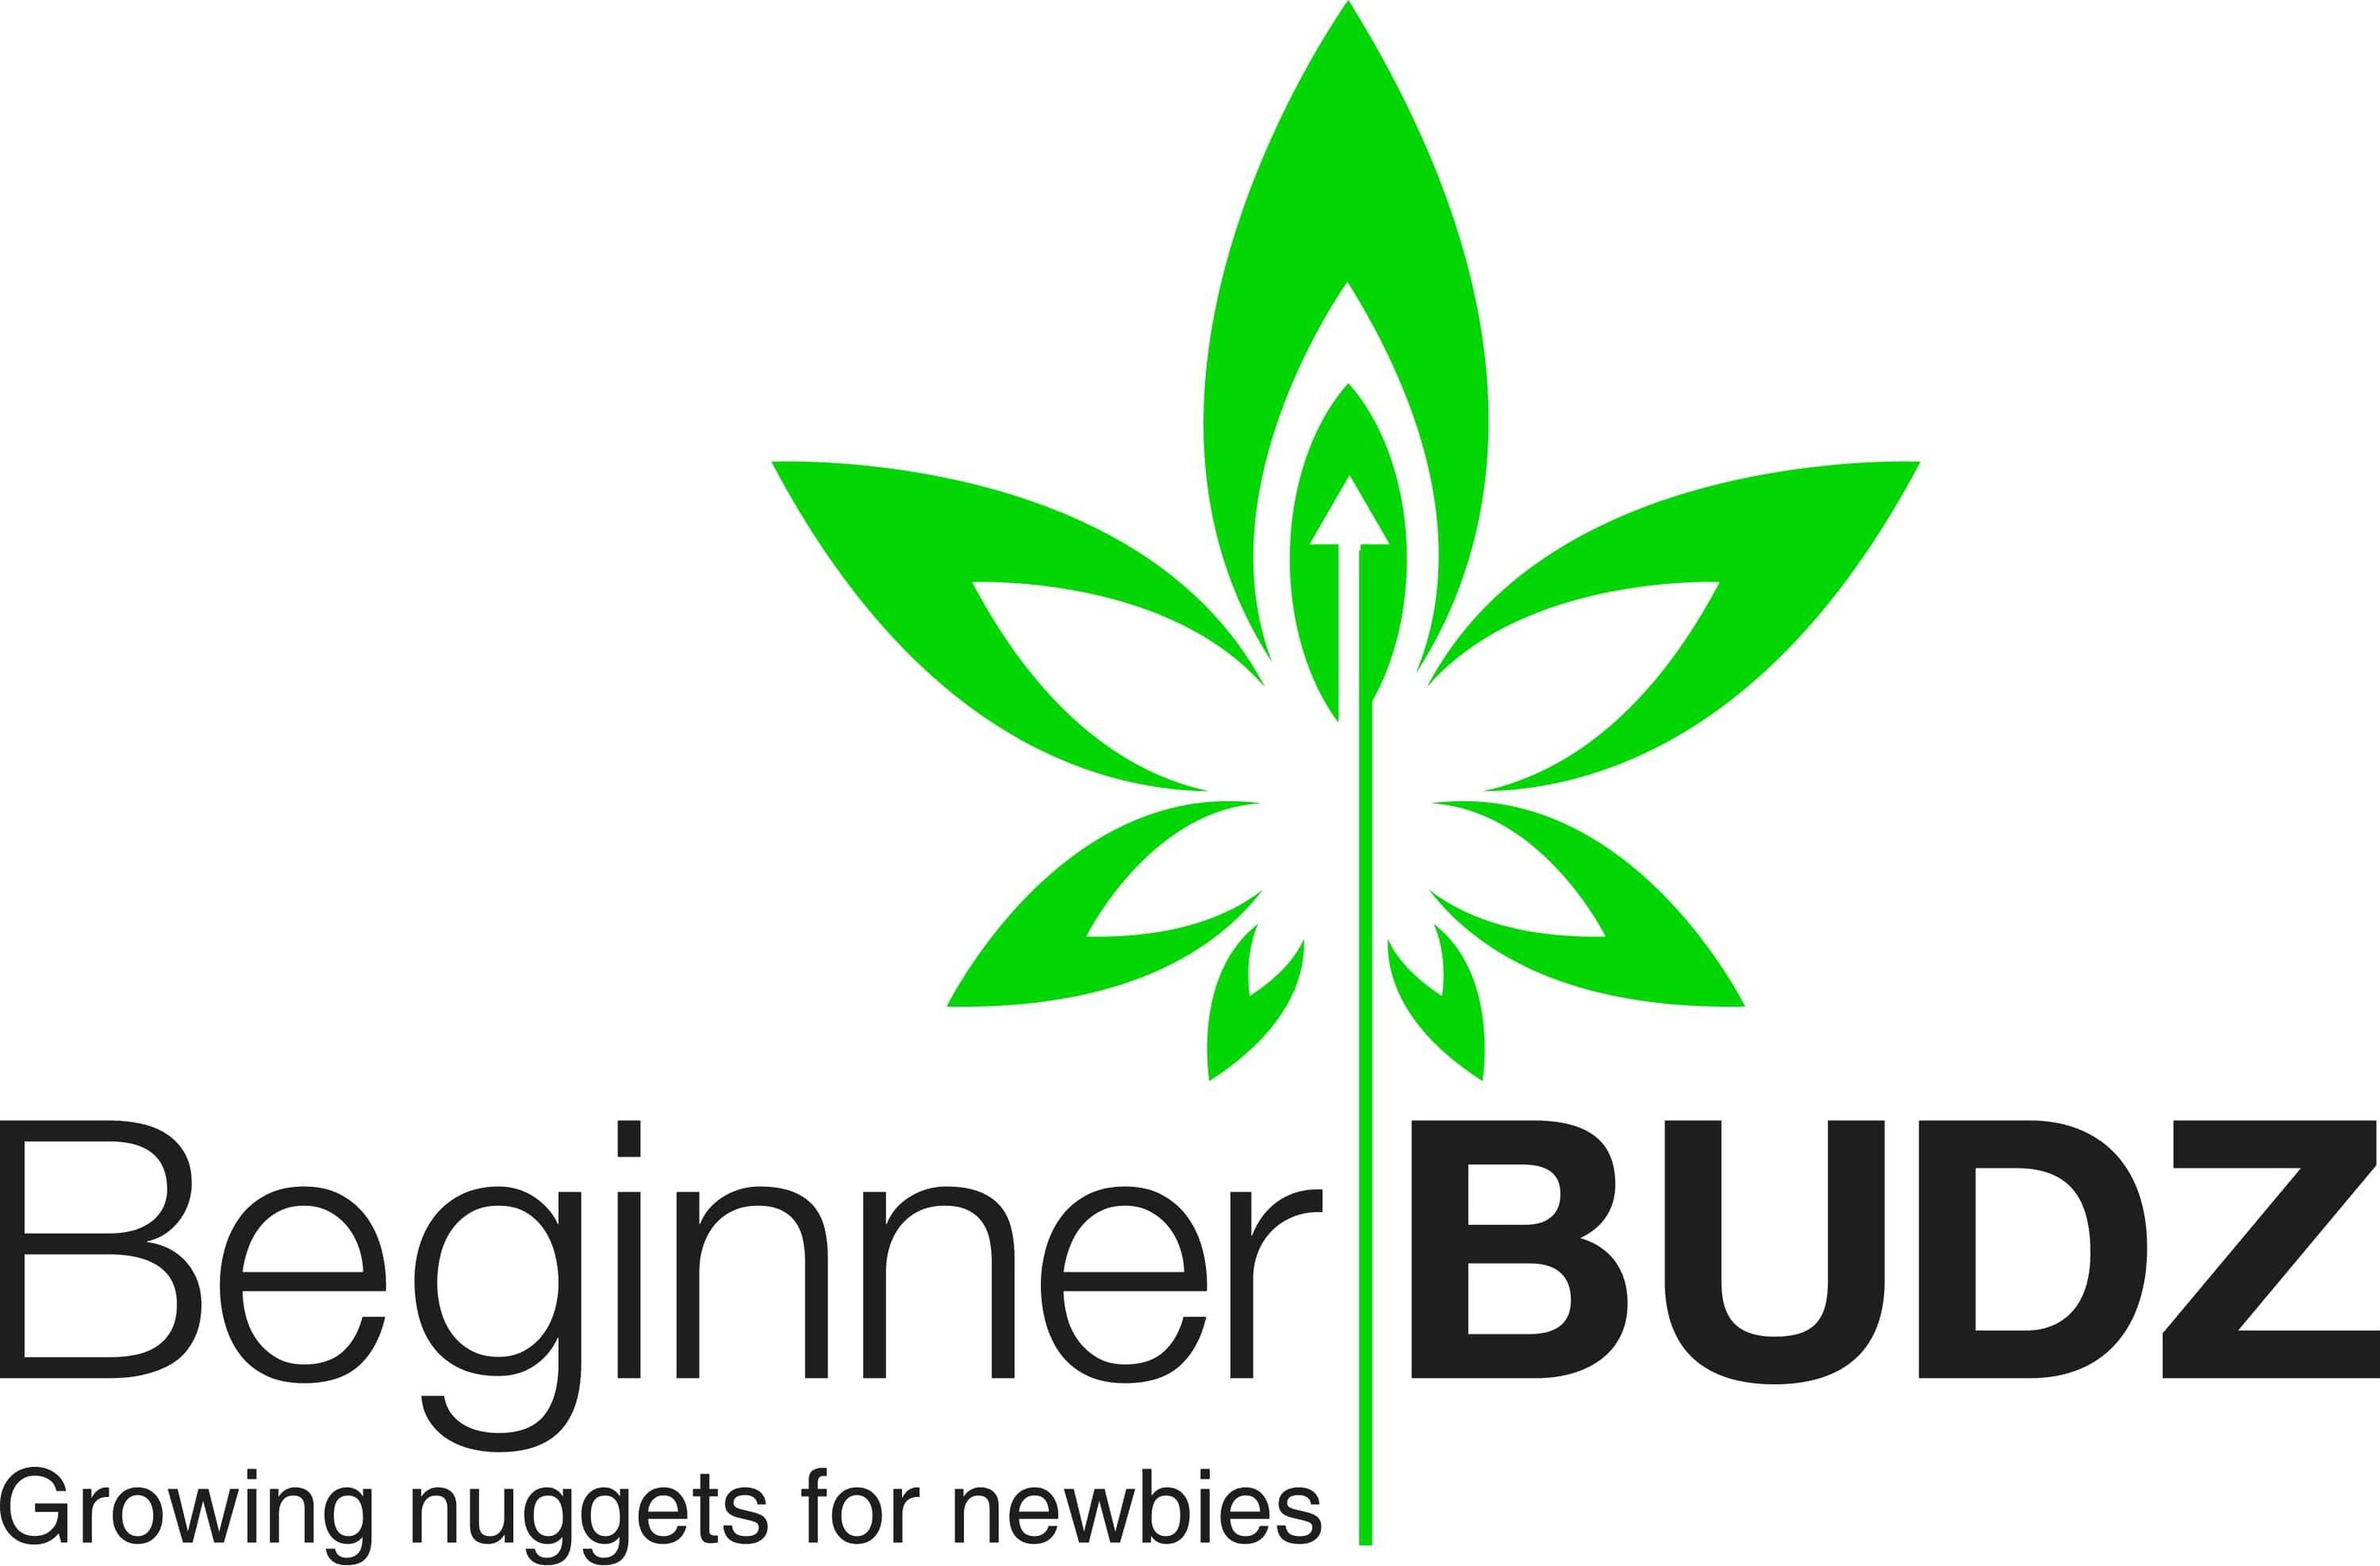  BEGINNER BUDZ , GROWING NUGGETS FOR NEWBIES